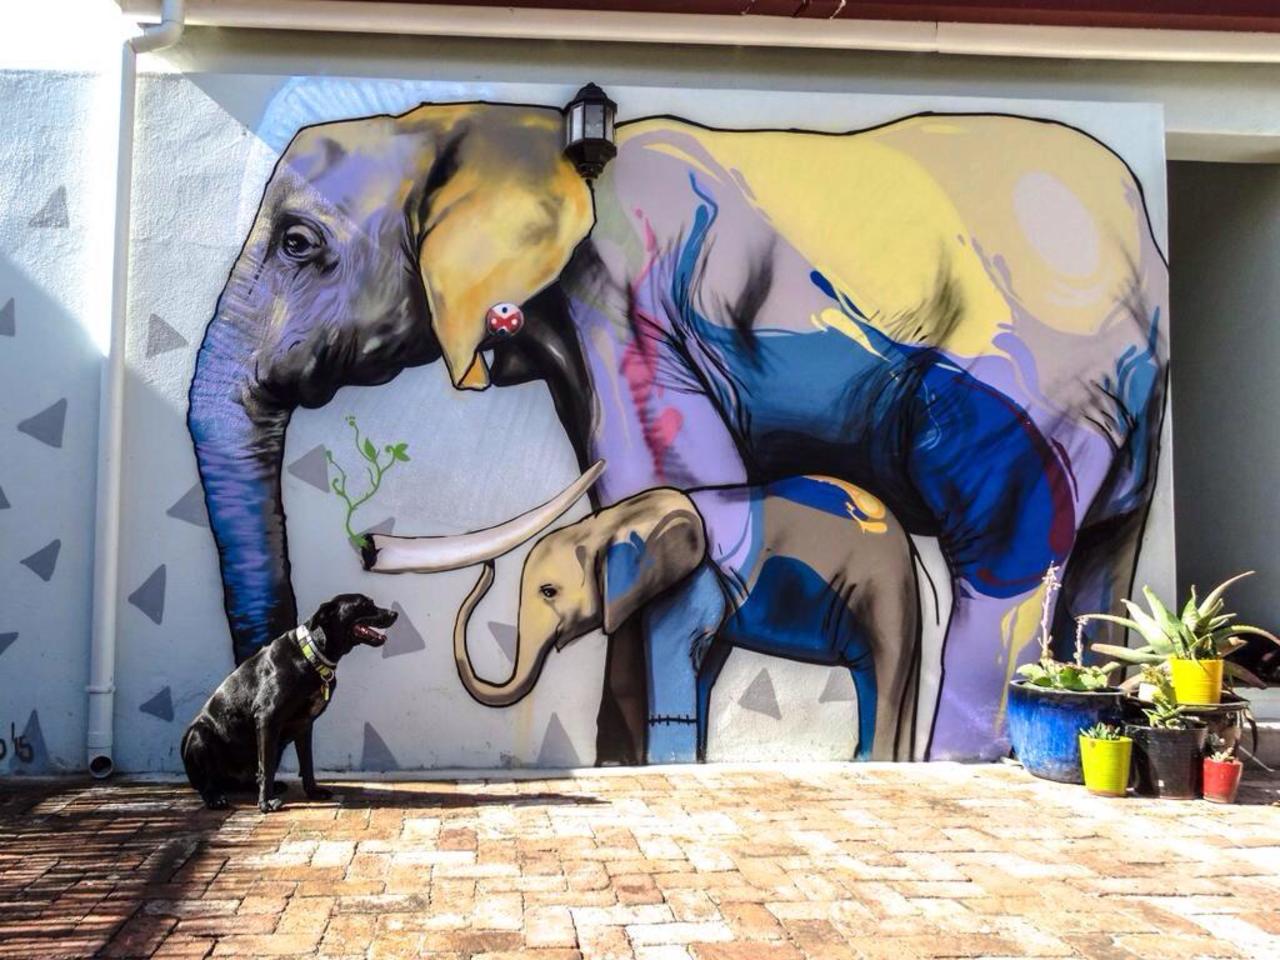 Latest nature in Street Art piece by Falko Paints In Cape Town

#art #mural #graffiti #streetart http://t.co/XO7DUBdfH8